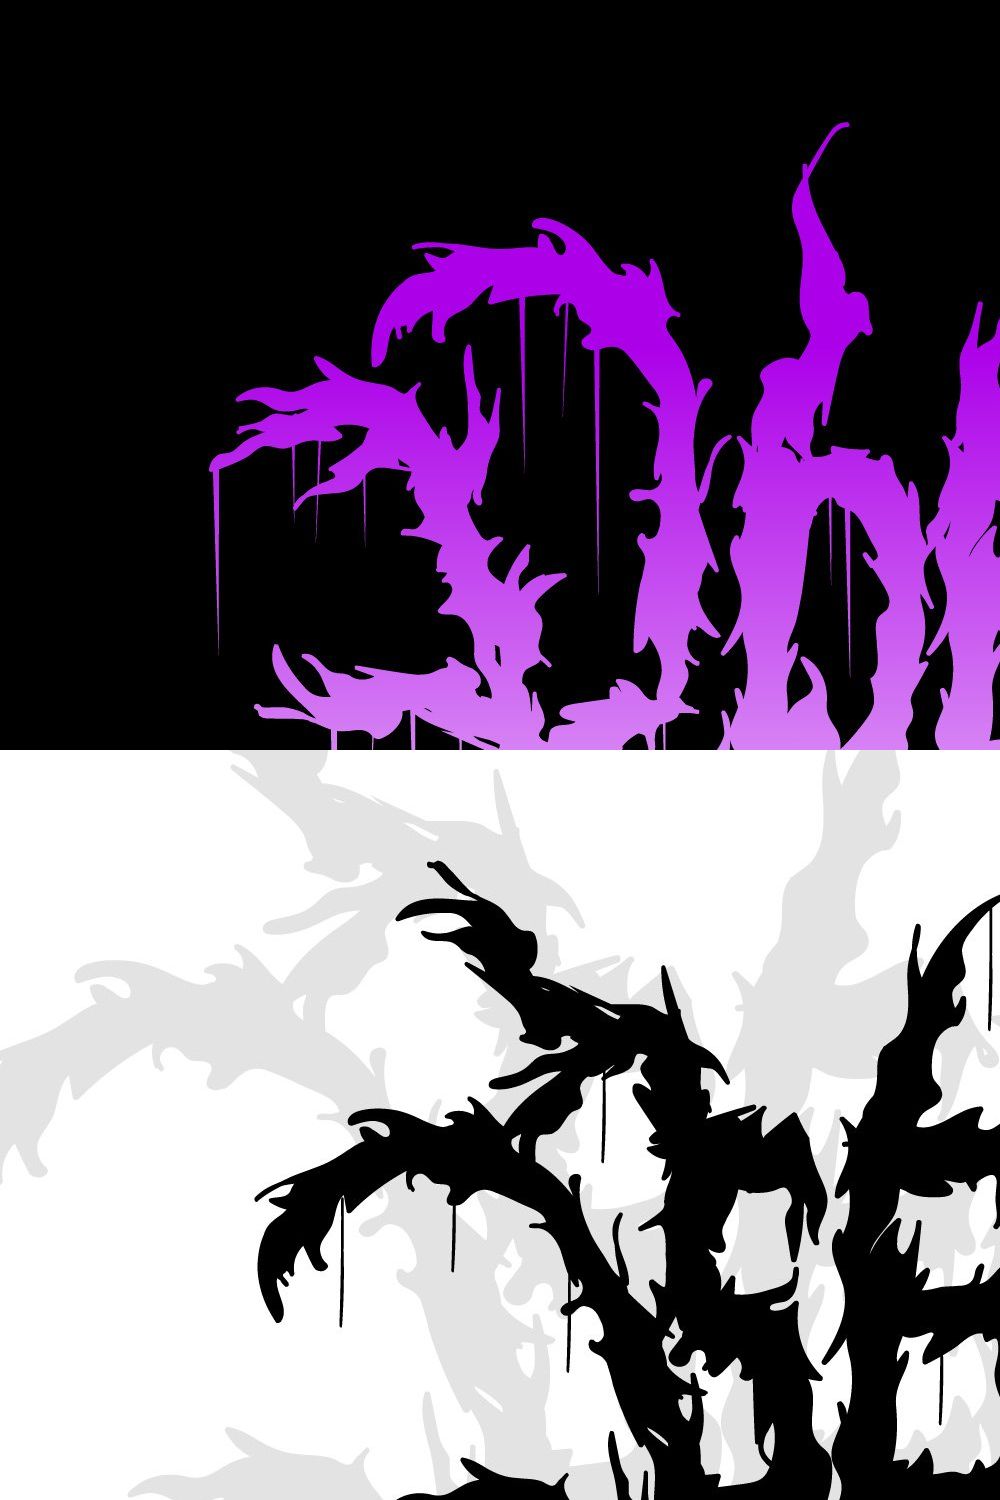 Death angel - Death metal font style pinterest preview image.